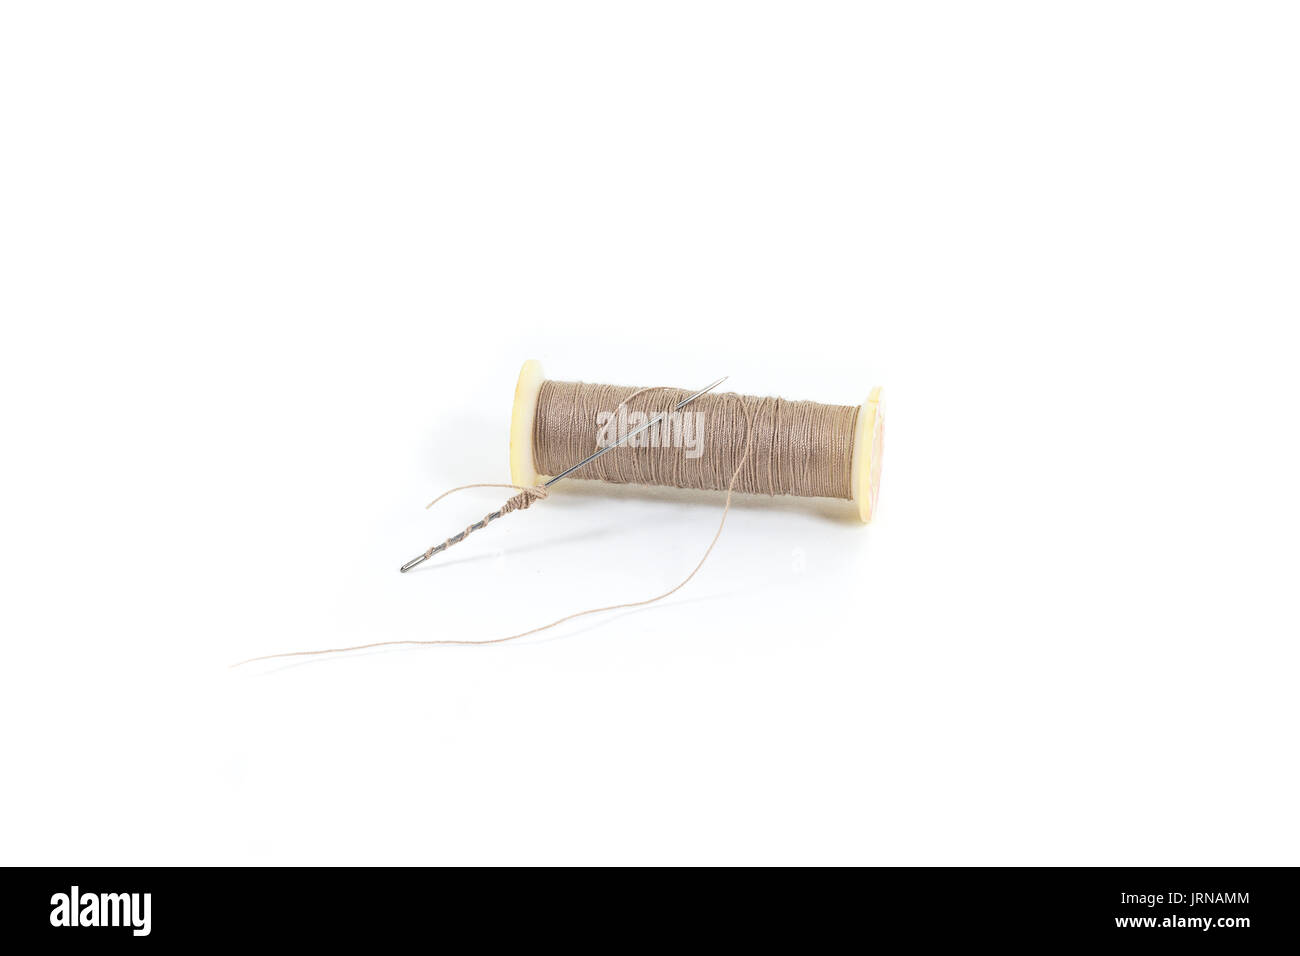 Thread and needle isolated on white background Stock Photo